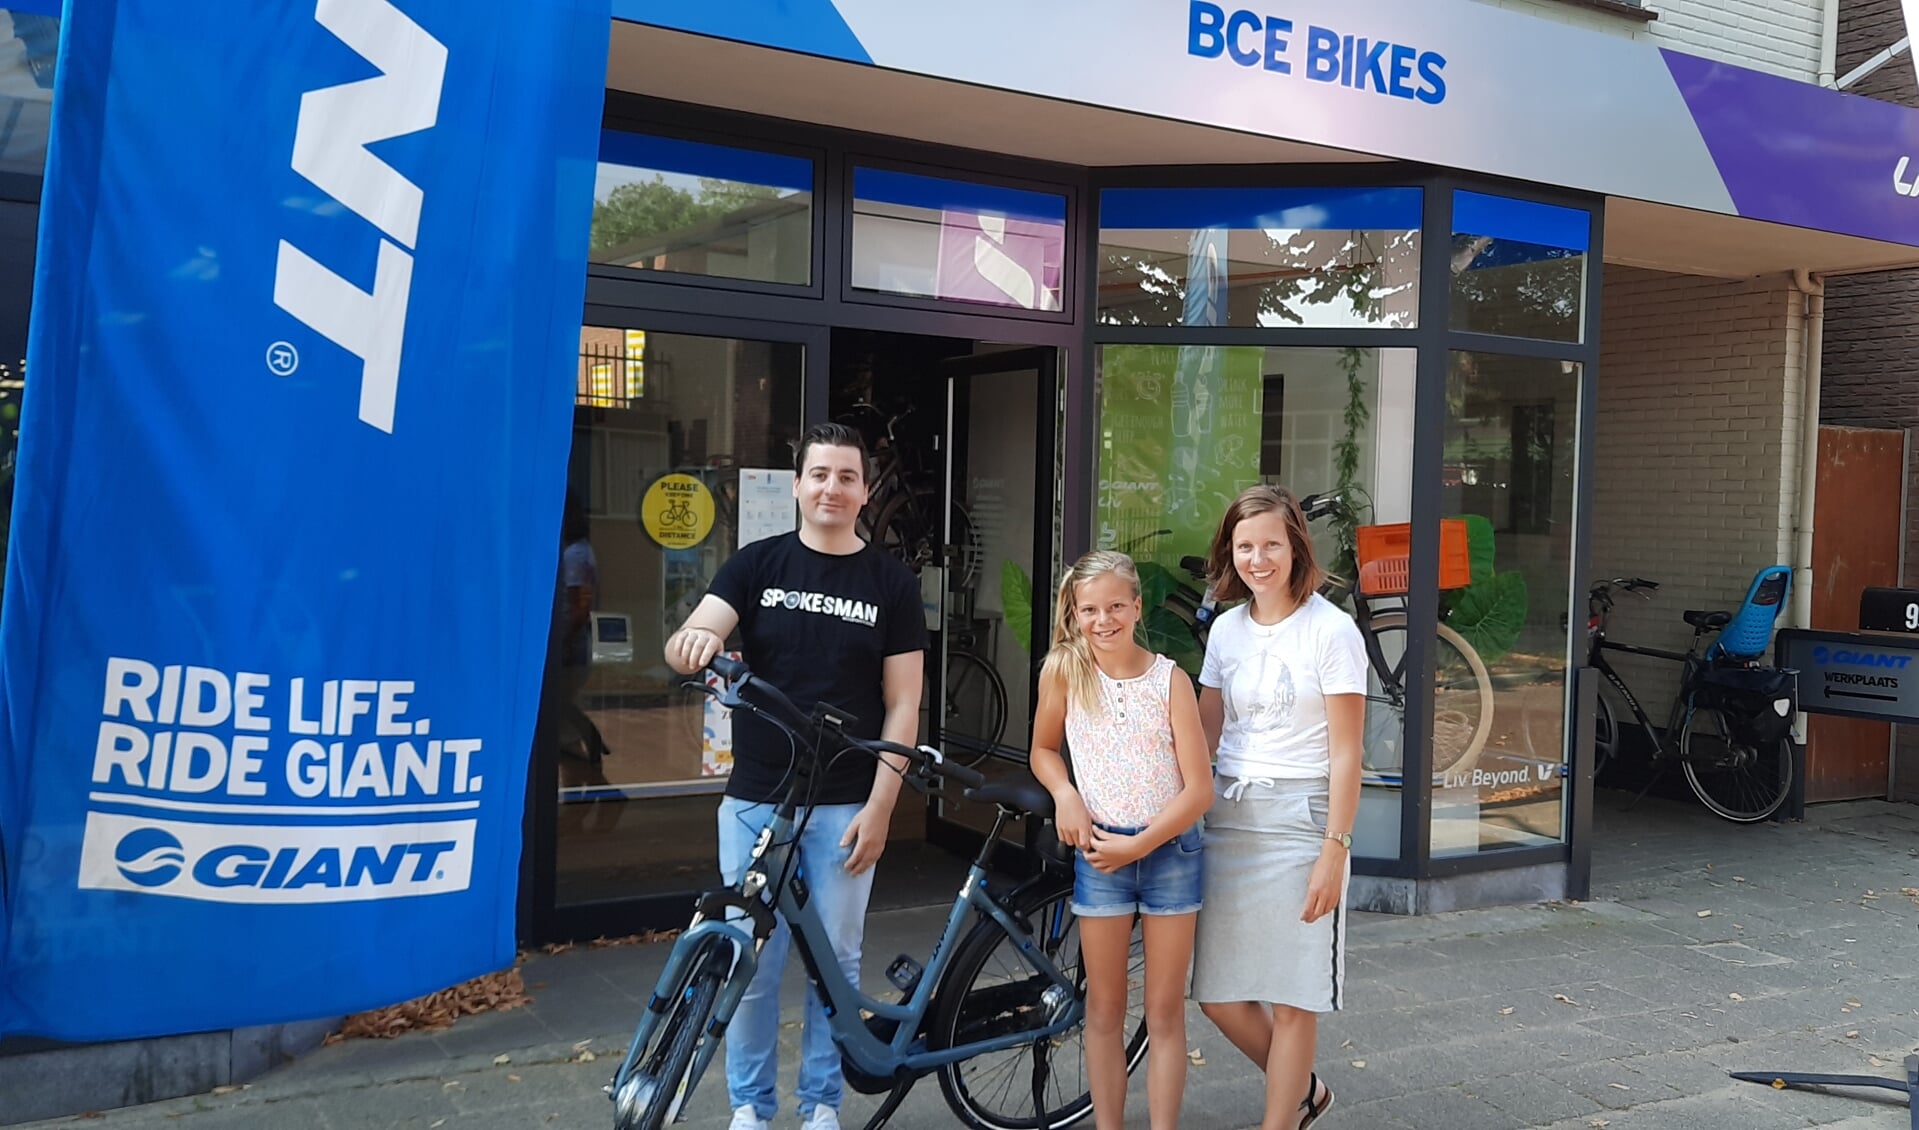 Puttense Dorien van der Poel neemt E-bike in ontvangst bij BCE-bikes